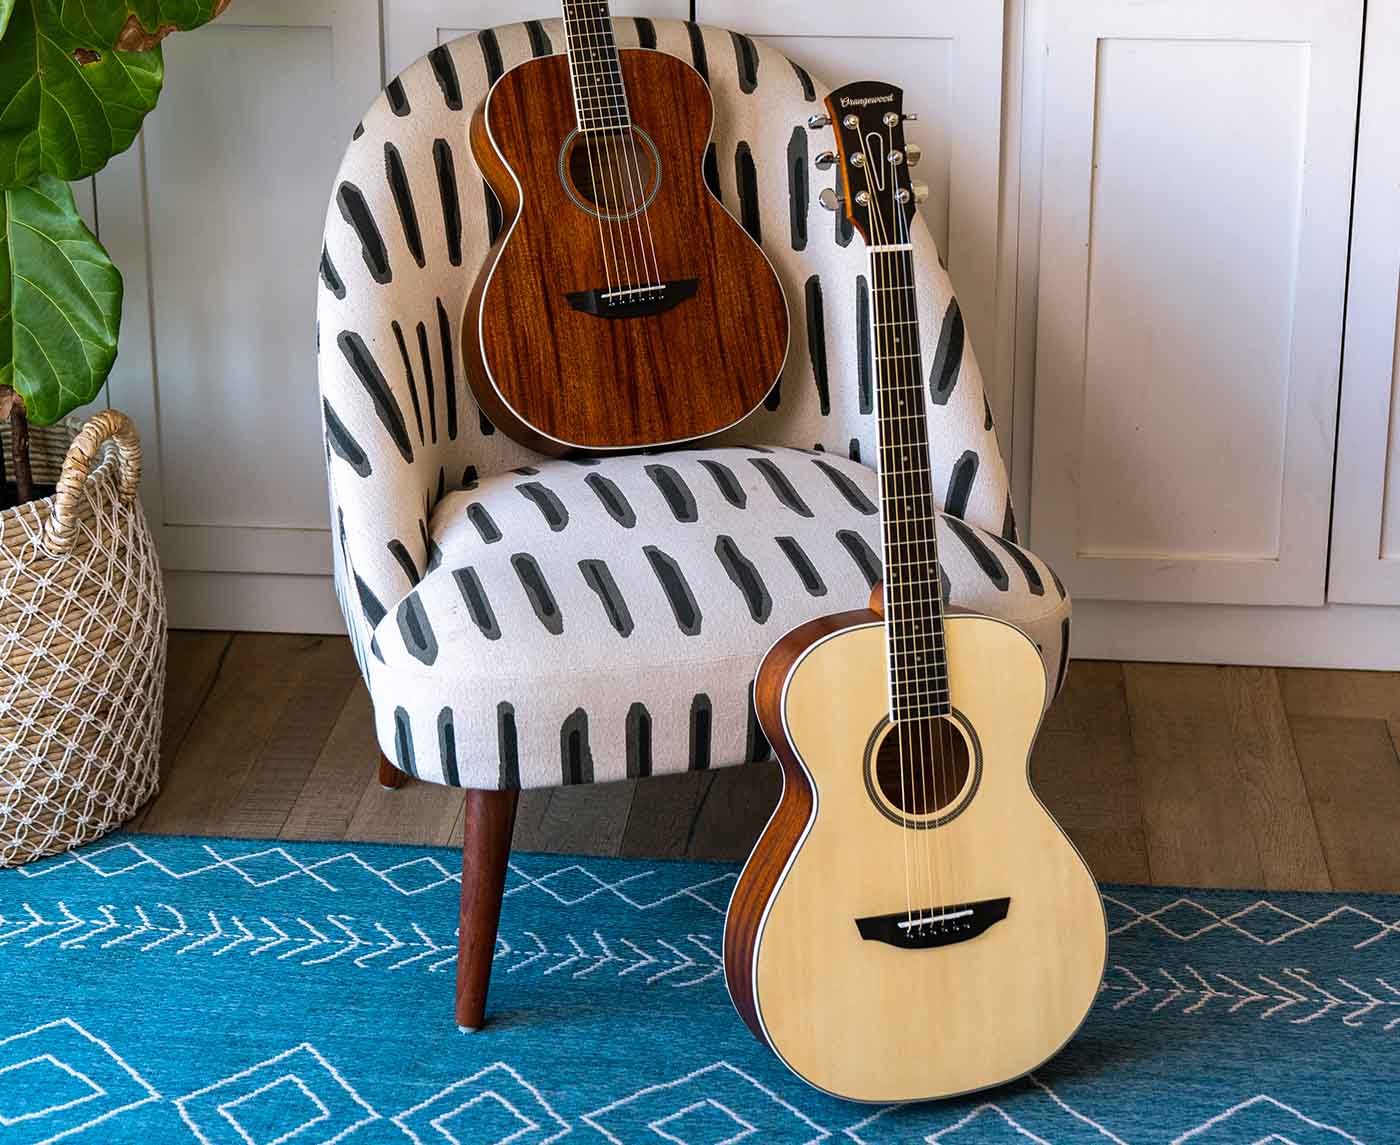 Dana mahogany and dana spruce guitars on a white chair 